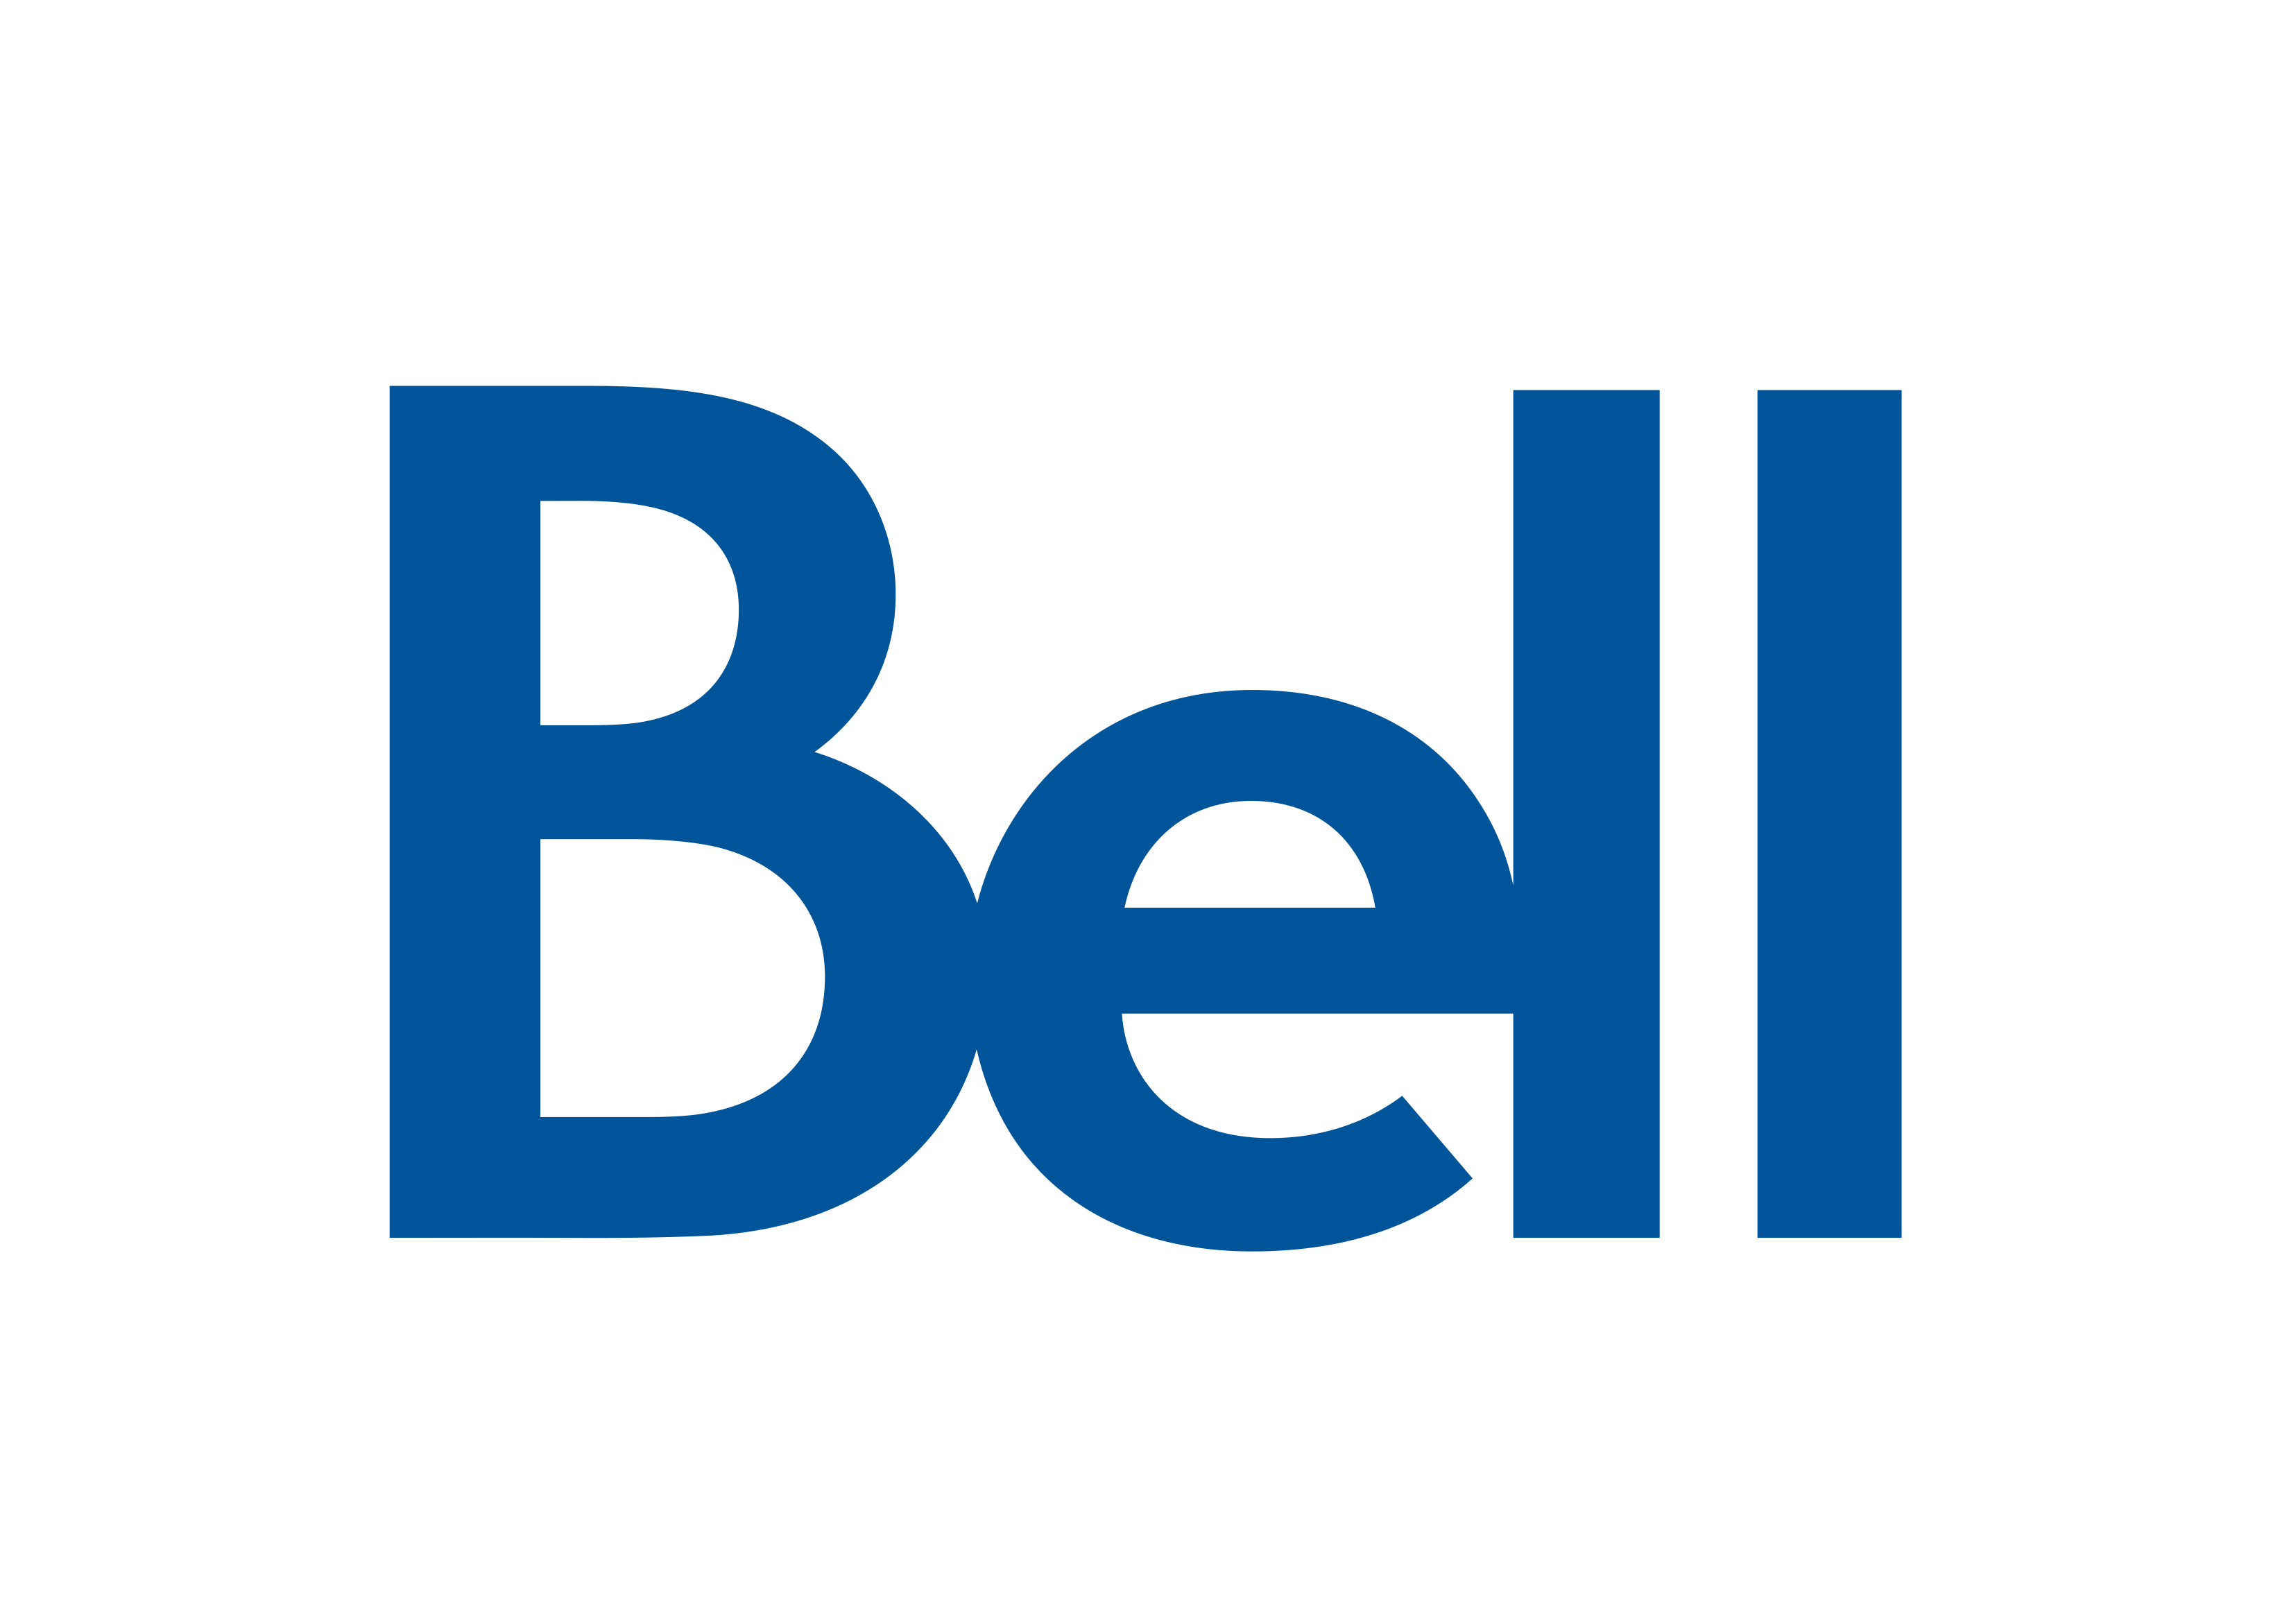 Sponsor logo: Bell Canada